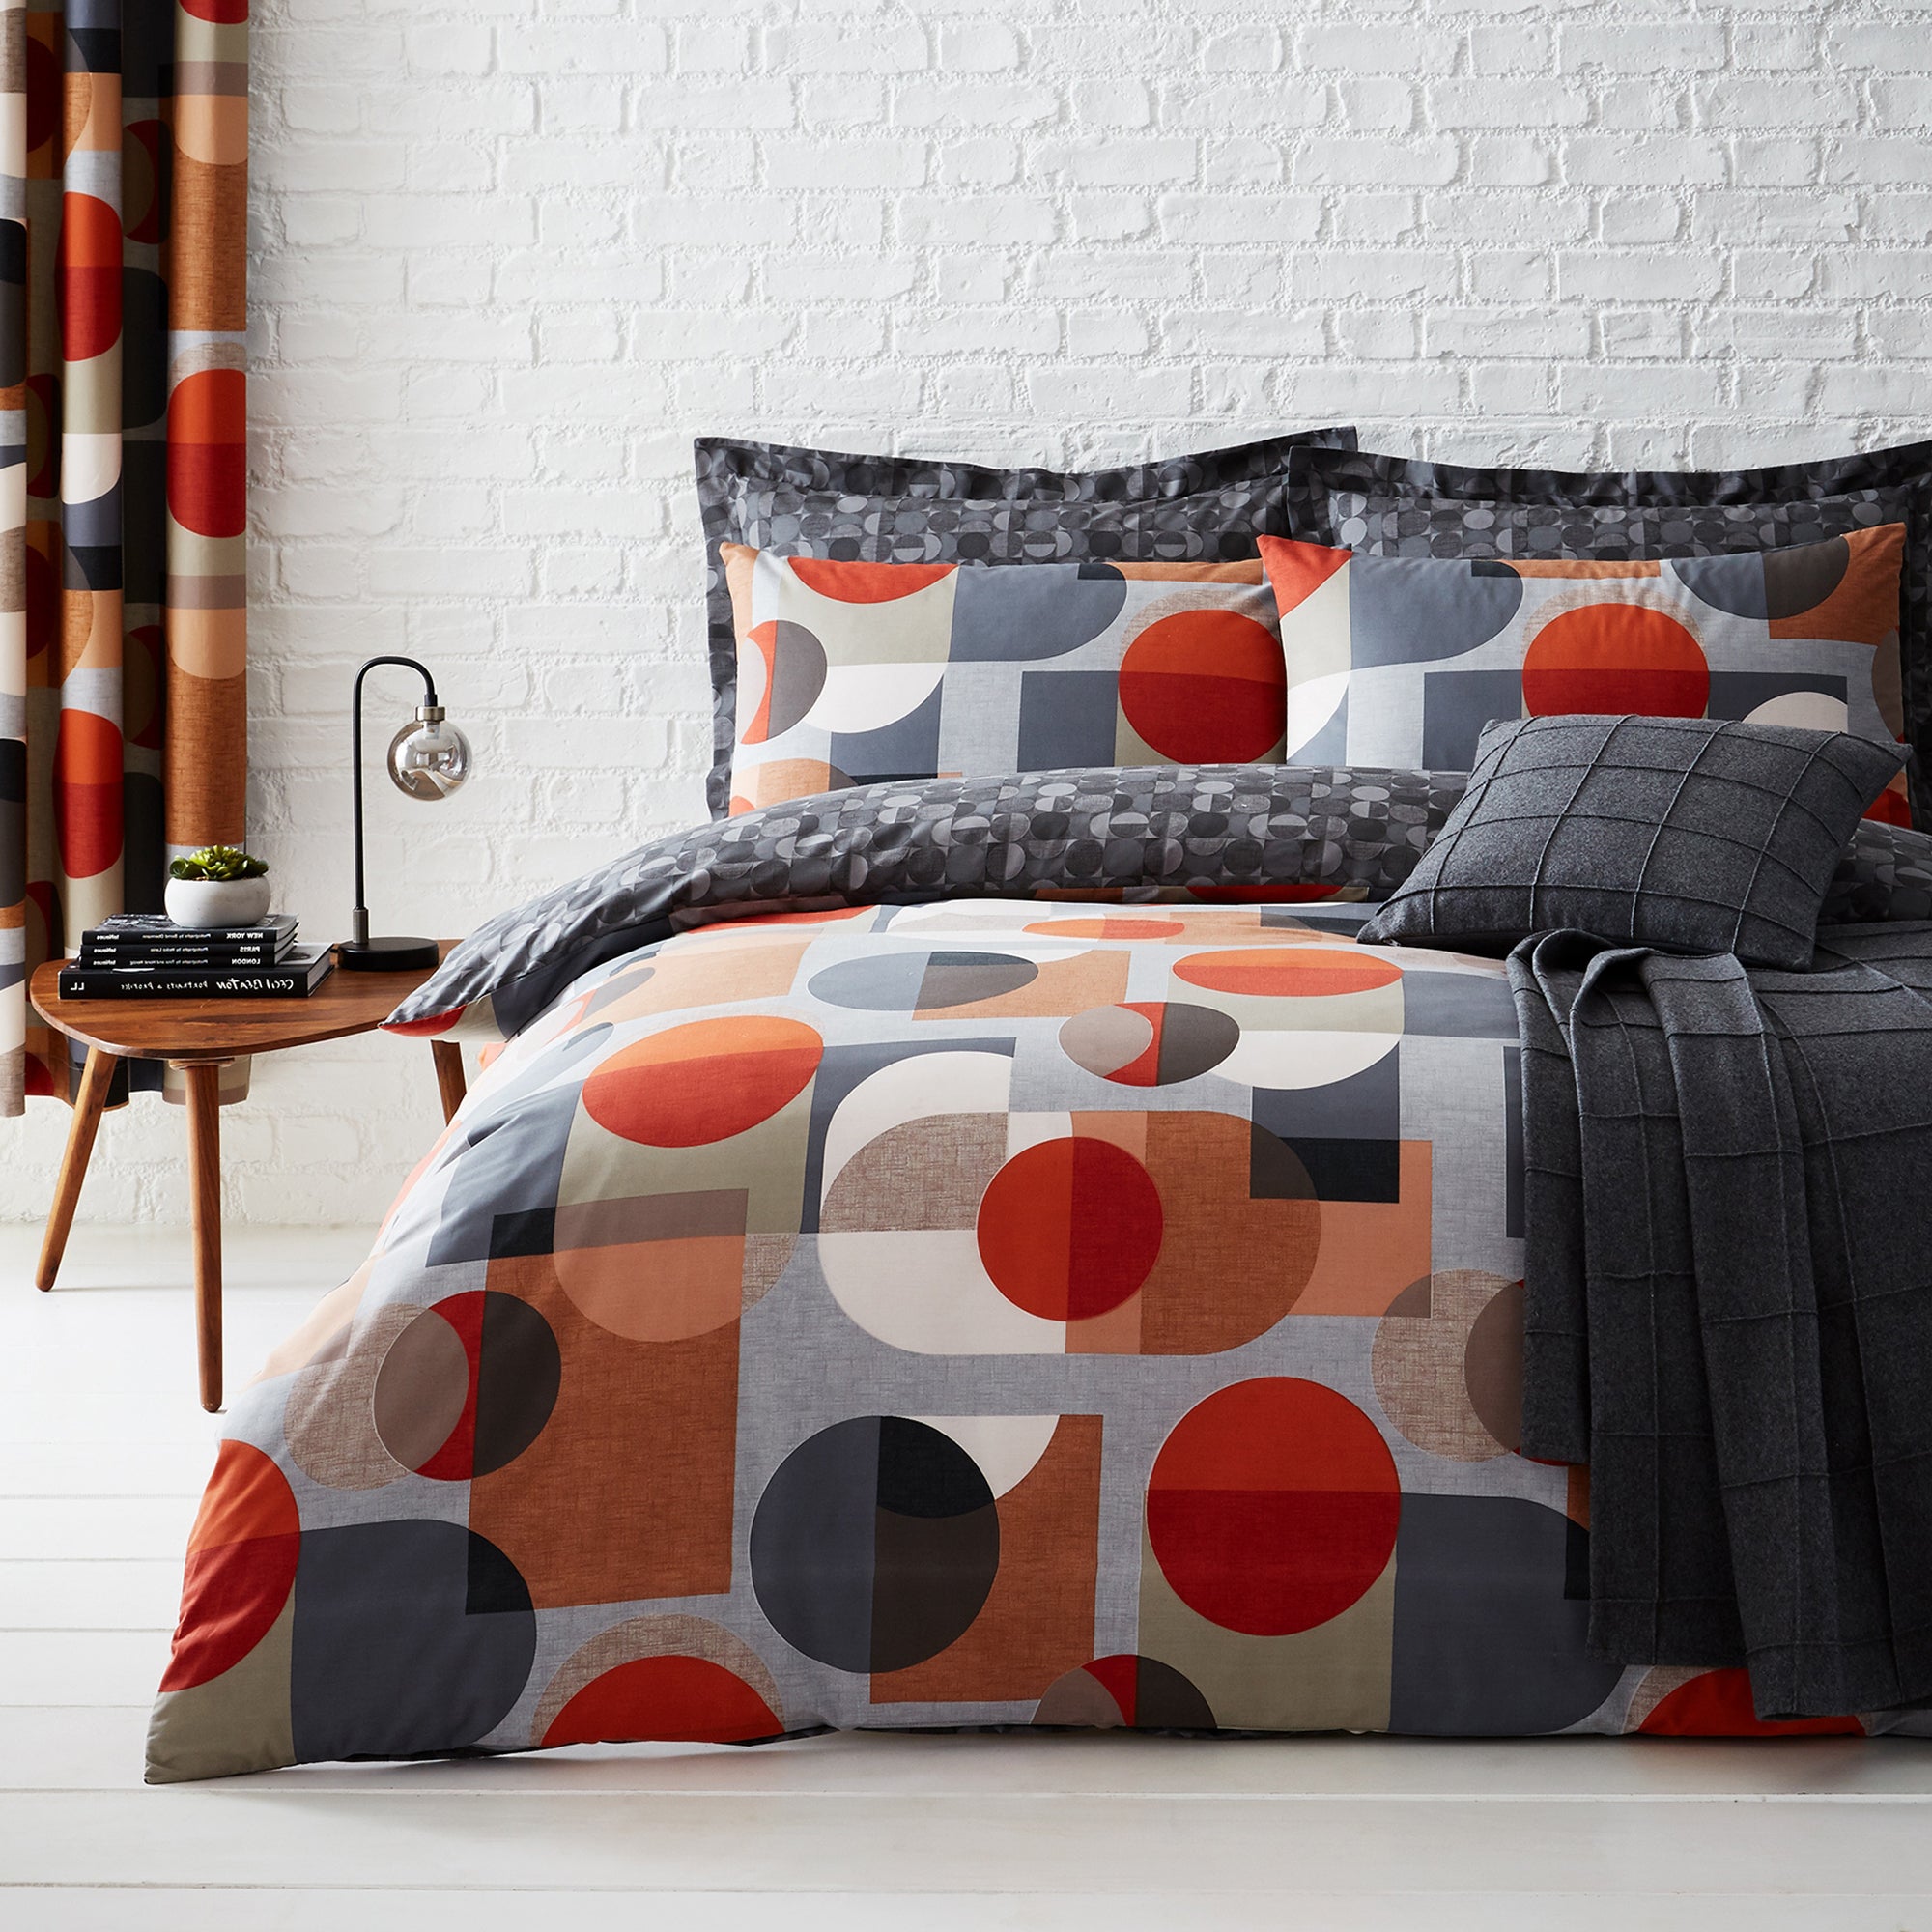 Photo of Elements oscar reversible orange duvet cover and pillowcase set orange- red and grey